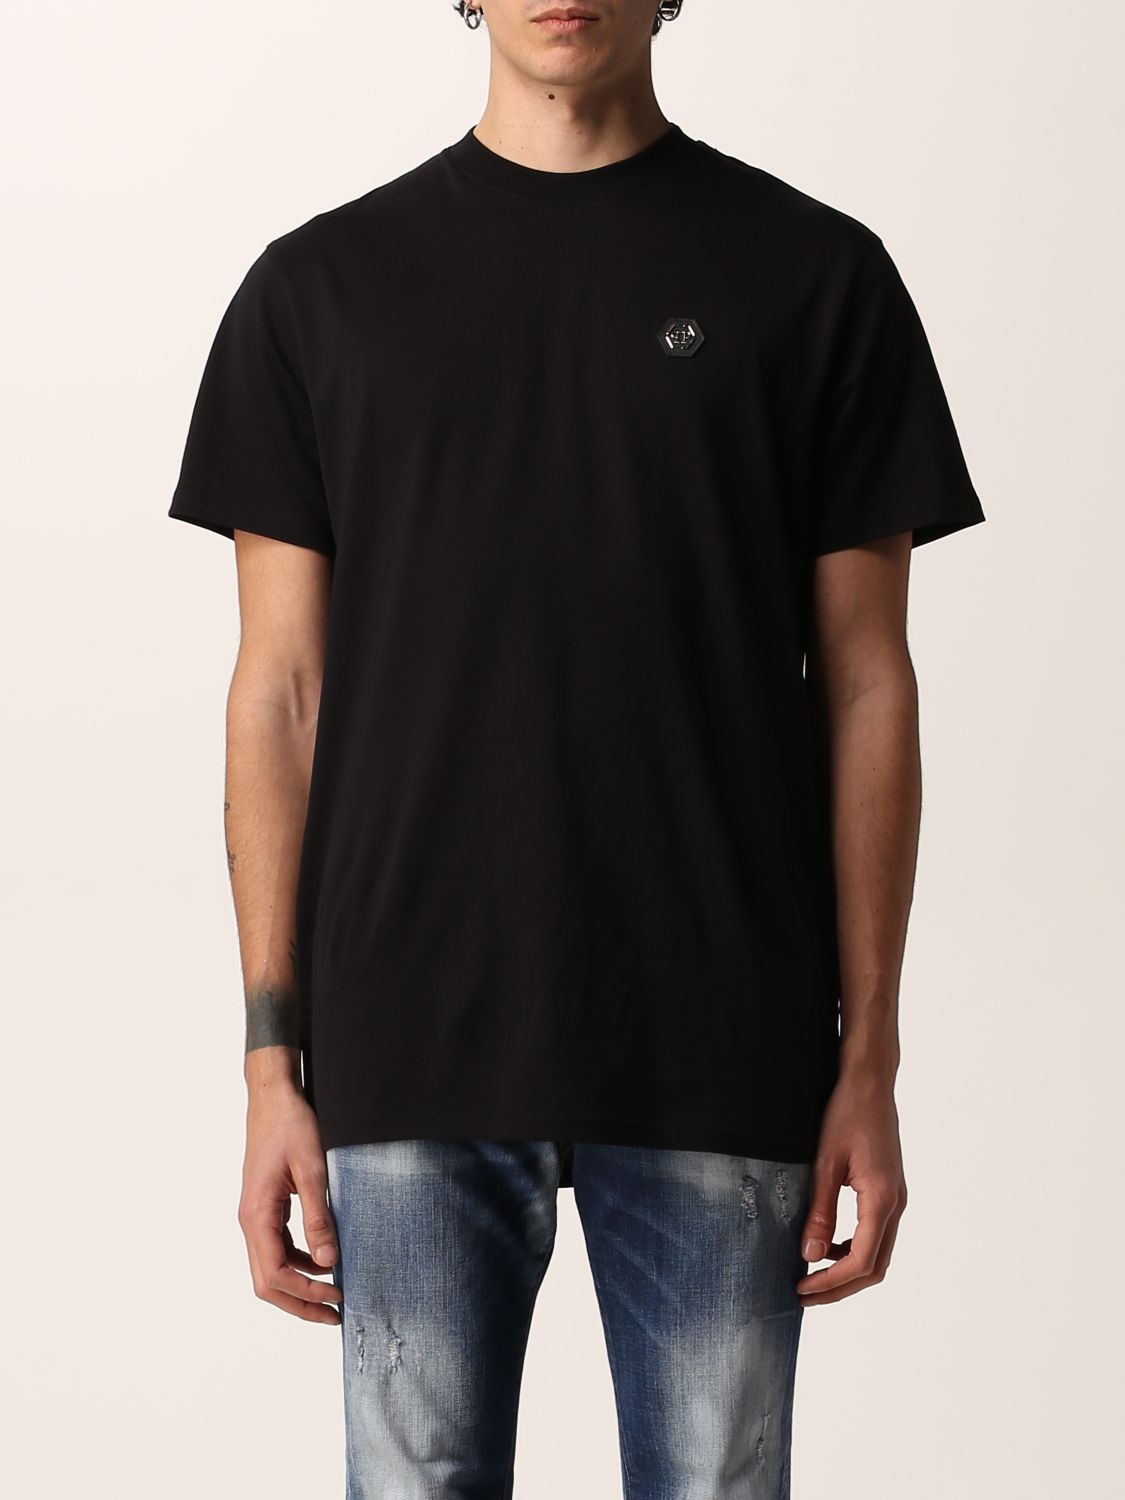 PHILIPP PLEIN: T-shirt with mini PP Hexagon logo - Black | Philipp ...